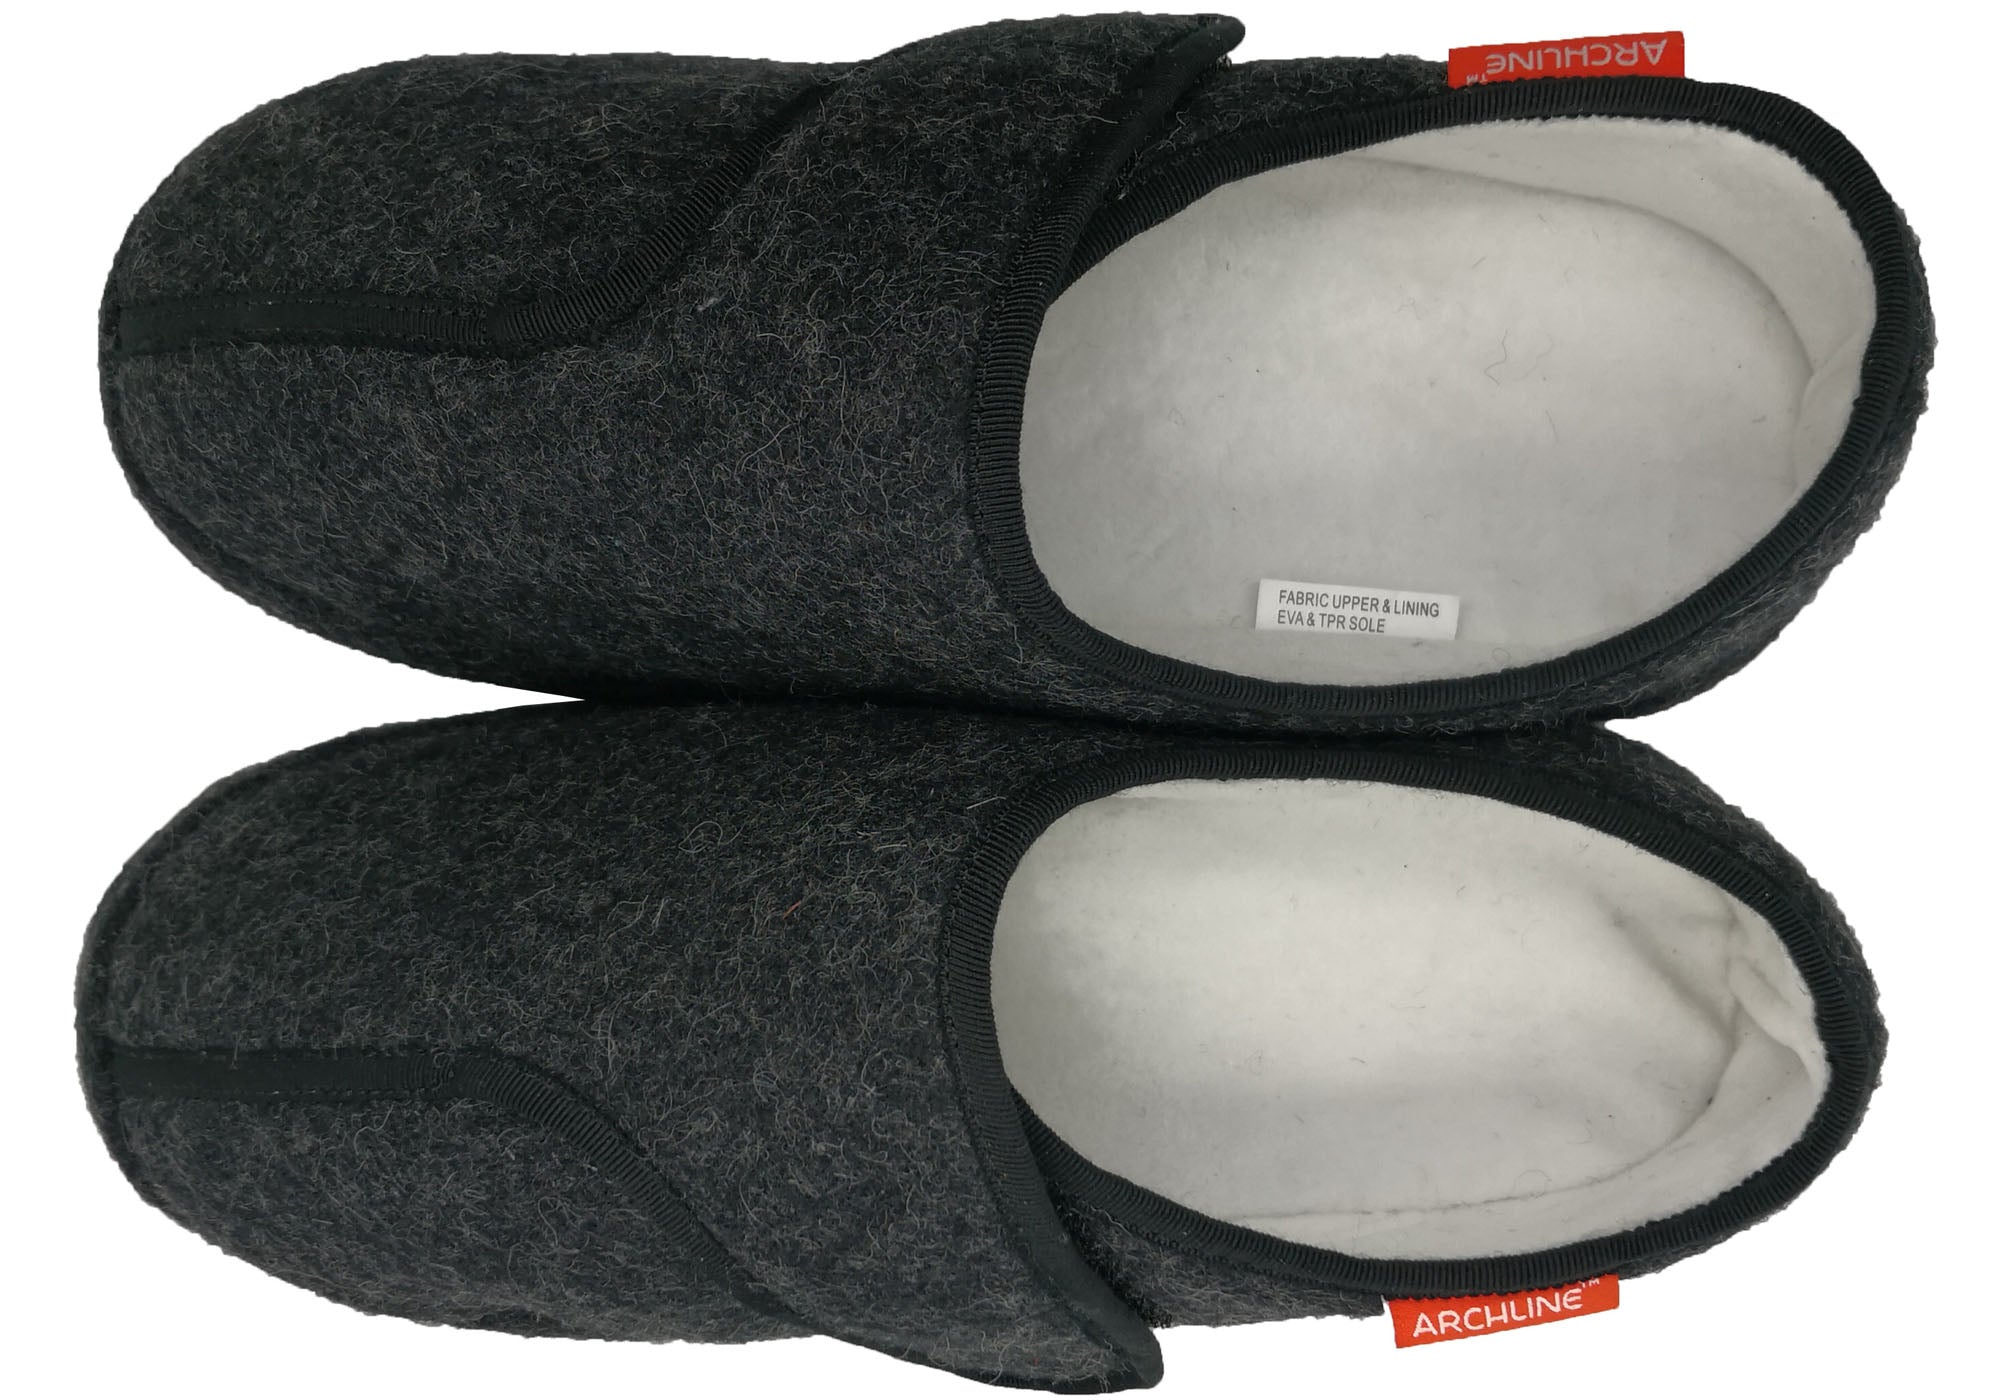 orthotic slippers australia